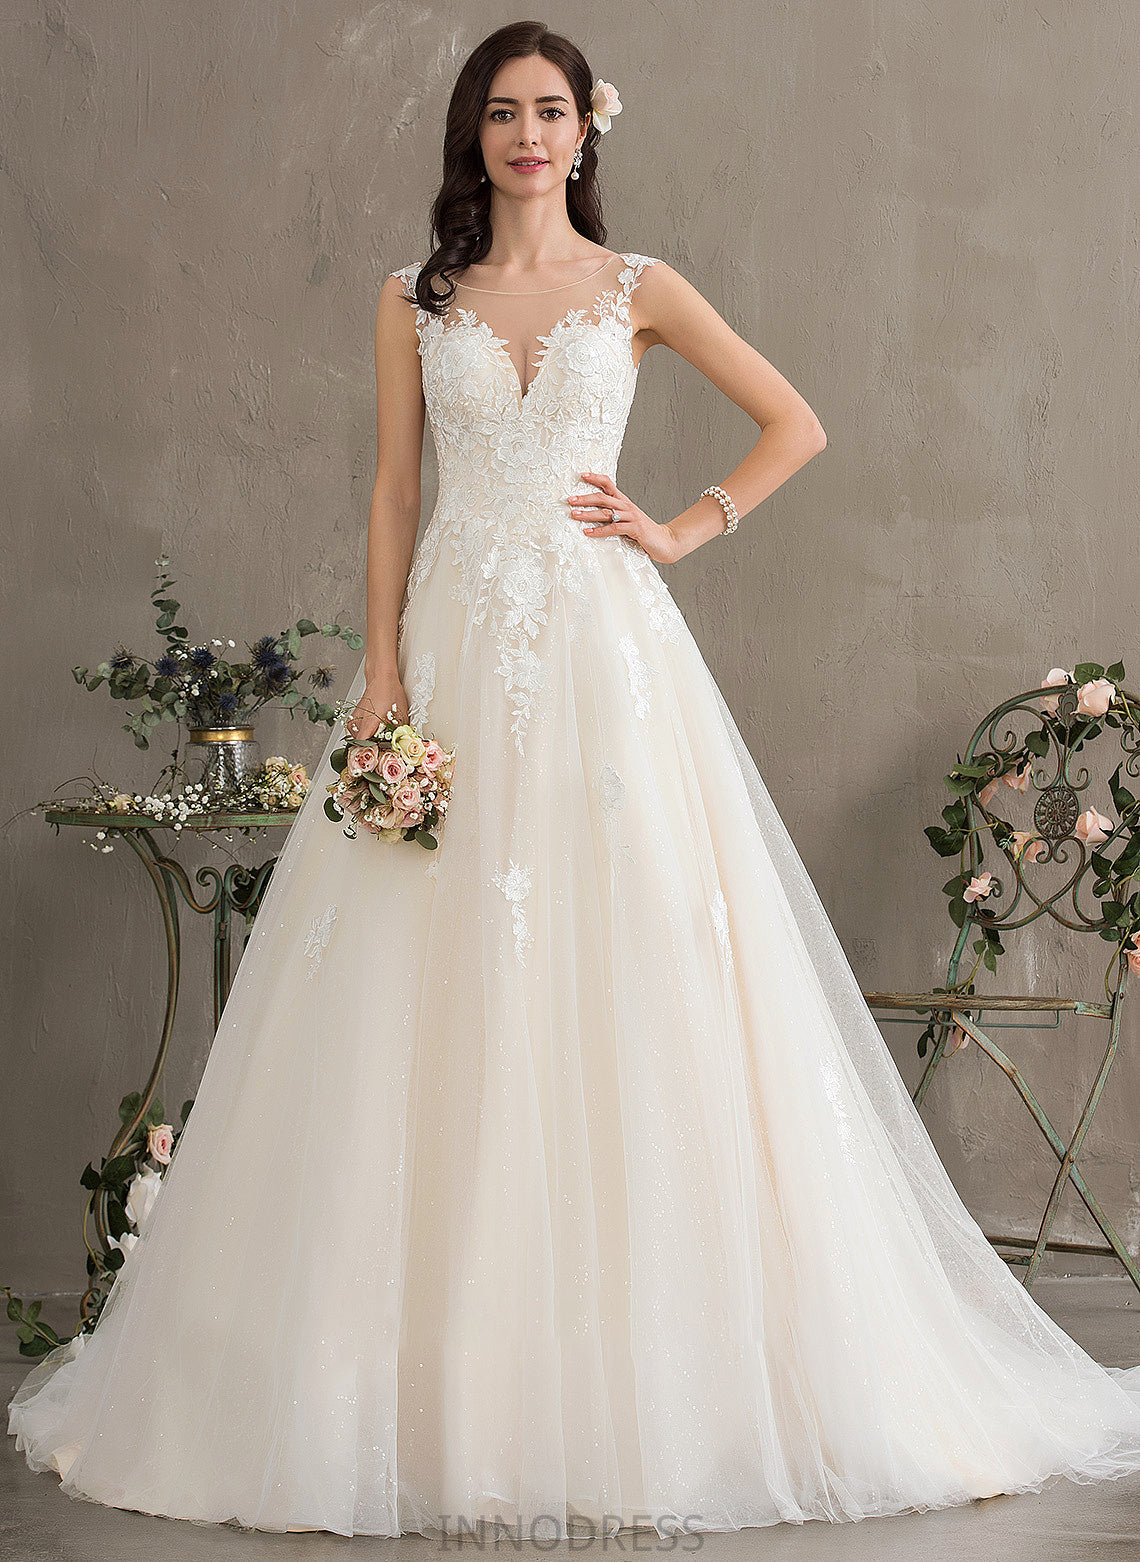 Court Eleanor Wedding Dresses Ball-Gown/Princess Illusion Wedding Train Dress Tulle